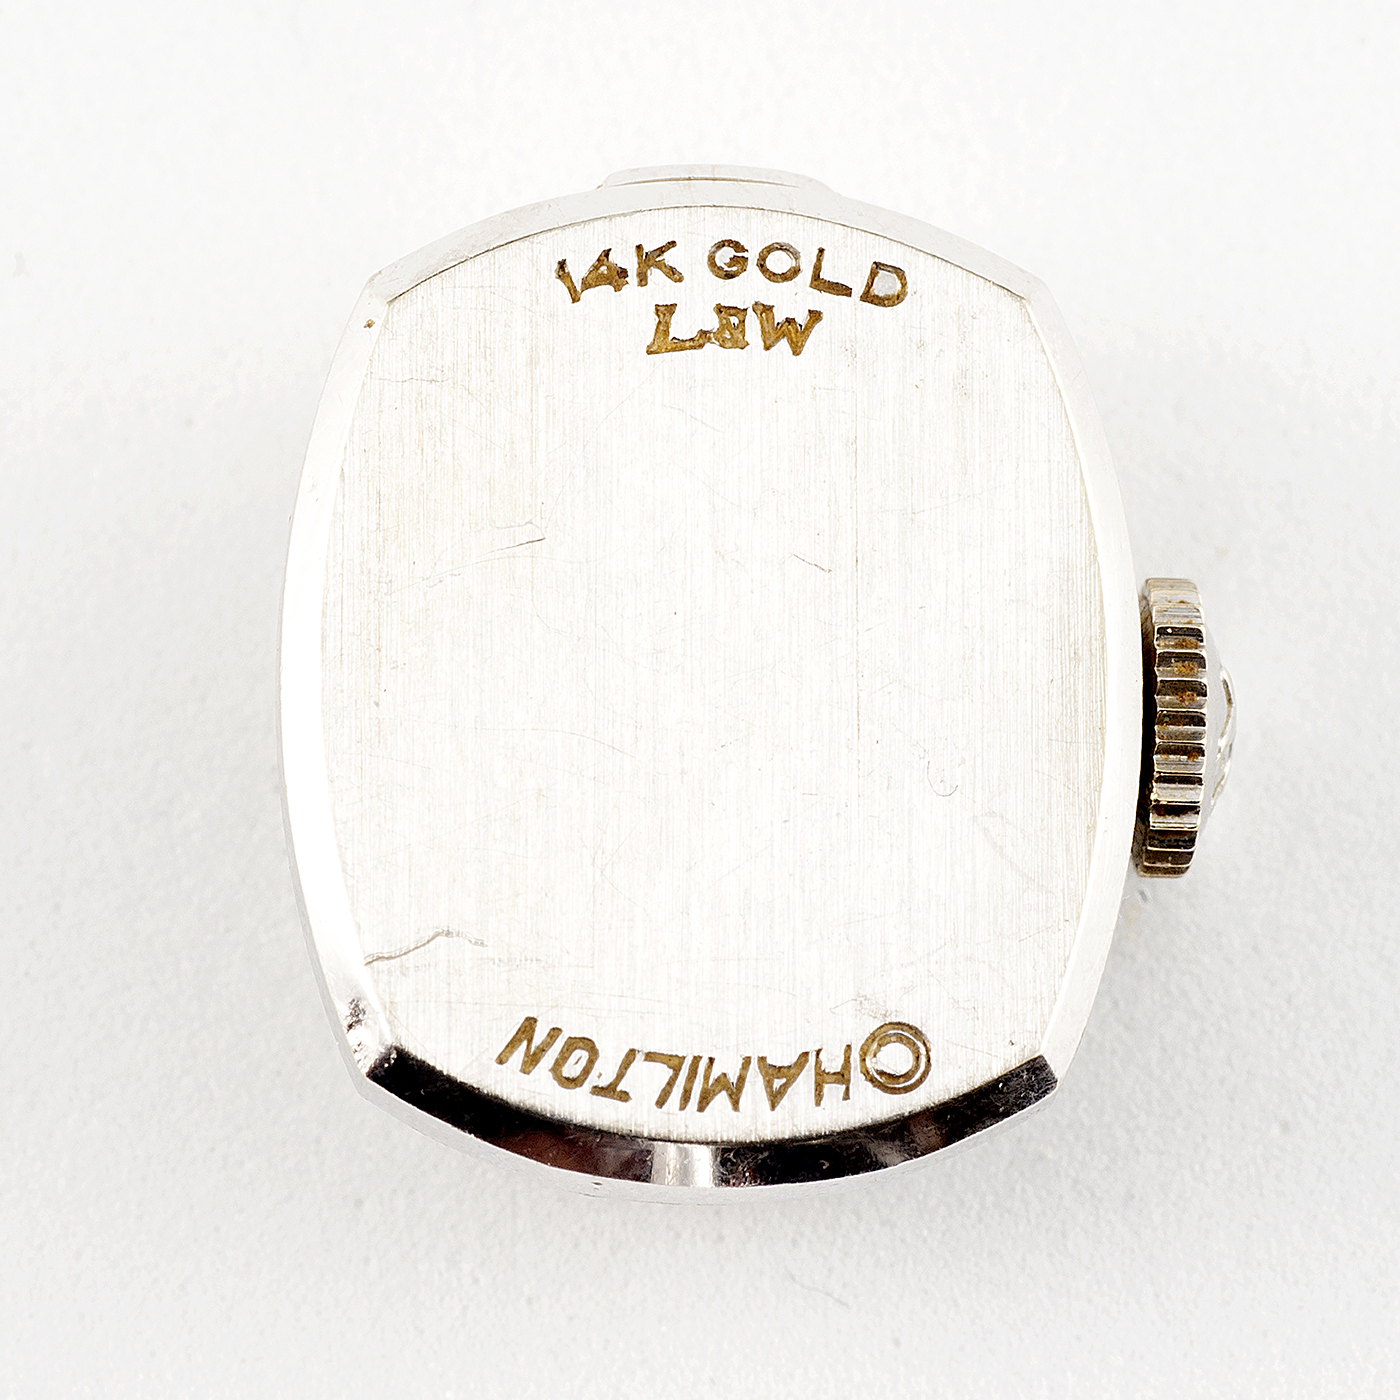 HAMILTON LADY. Reloj de pulsera para dama . Oro Blanco 14k. y diamantes. USA, ca. 1915-1920